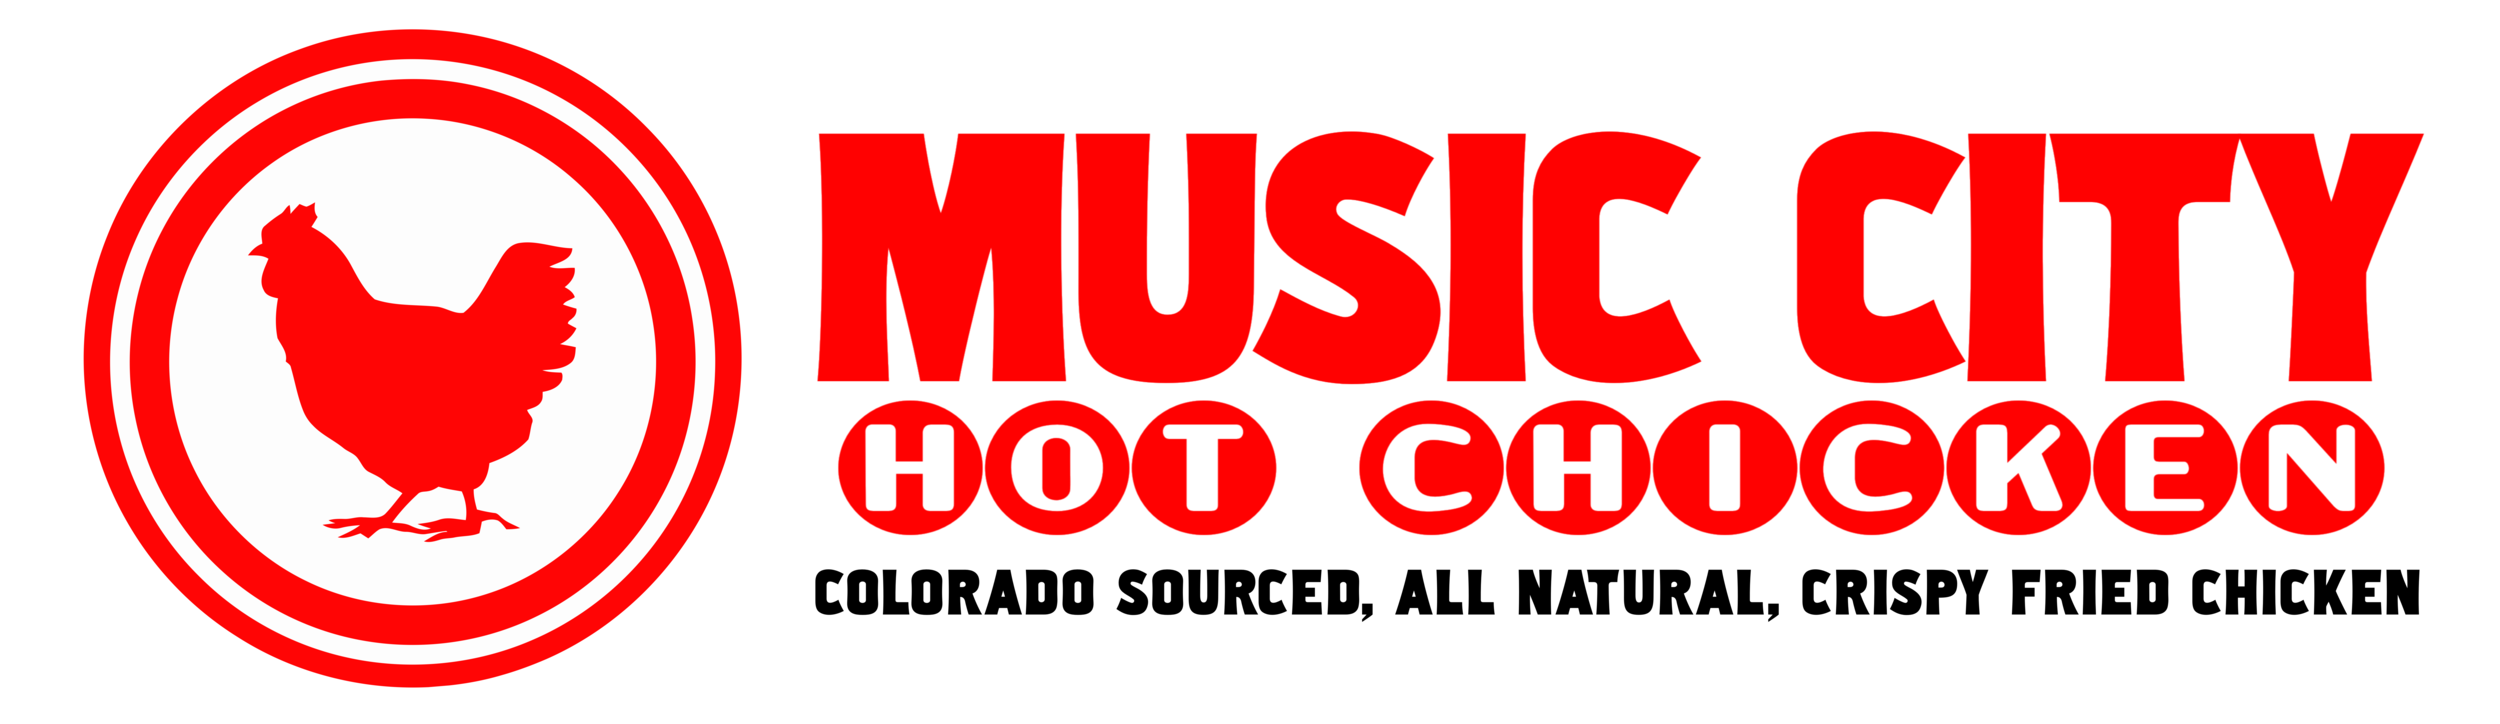 Music City Hot Chicken - Fort Collins